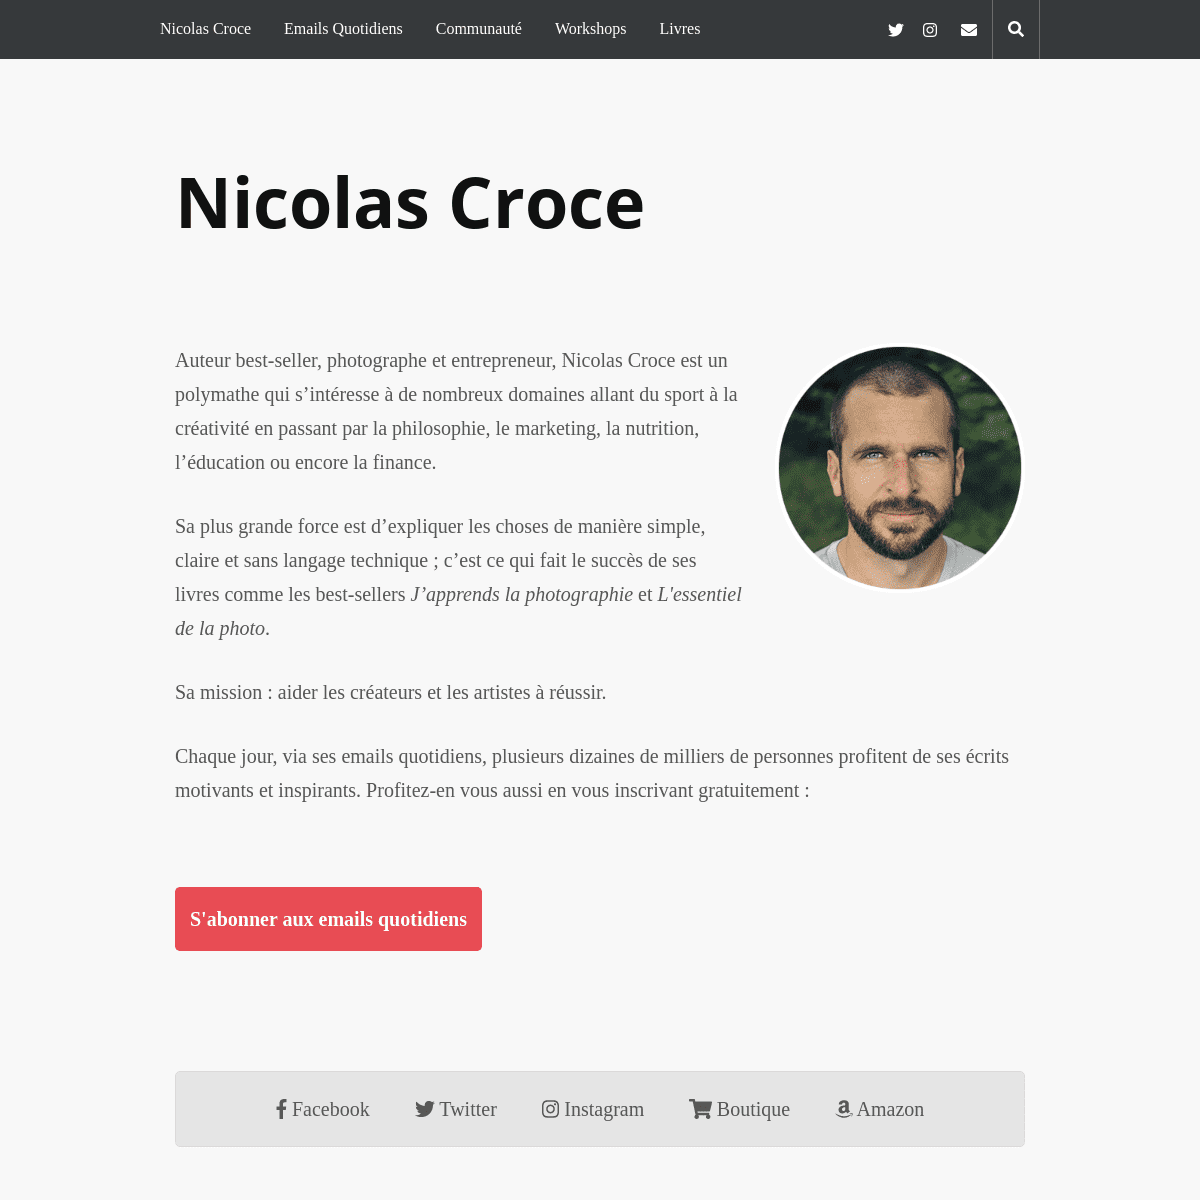 A complete backup of nicolascroce.com